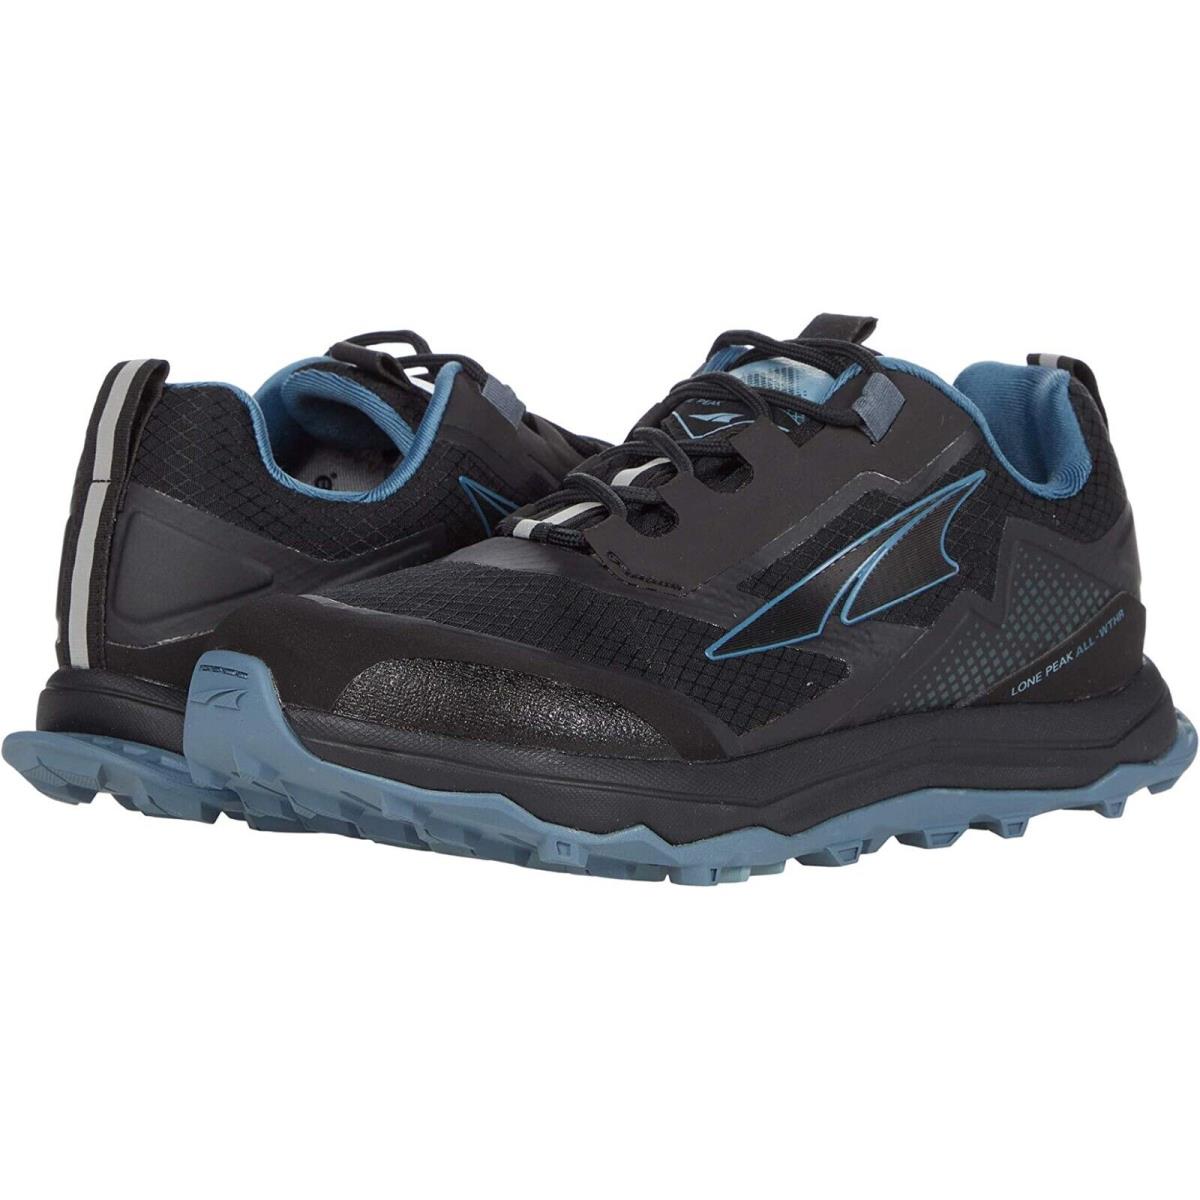 Altra N7823 Womens Black/blue Lone Peak All Weather Shoes Size US 6 EU 37 - Black/Blue